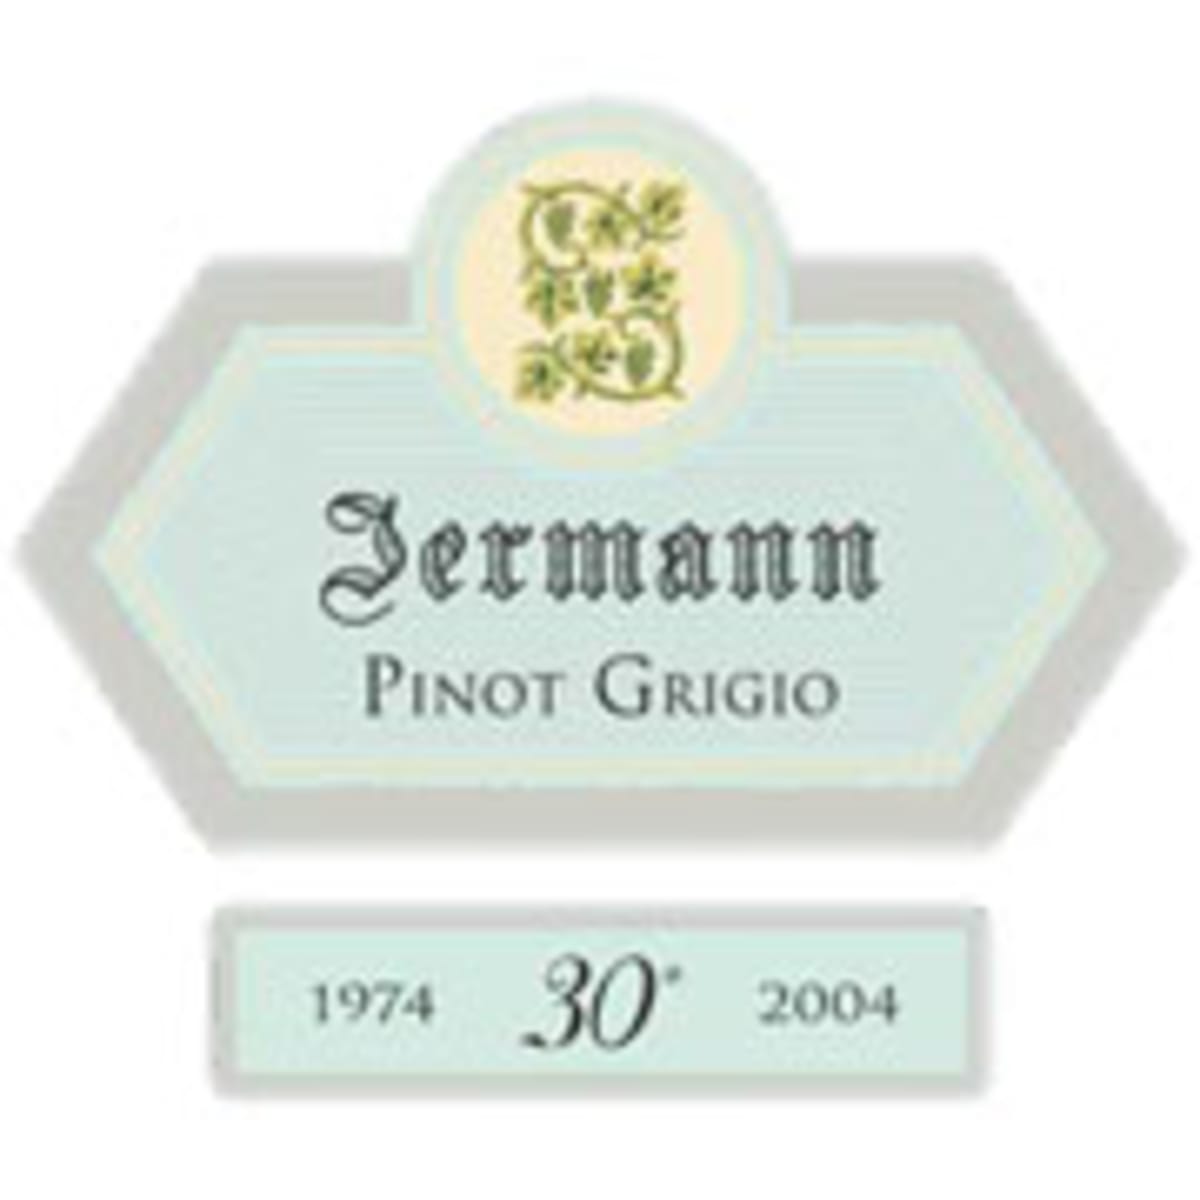 Jermann Pinot Grigio 2004 Front Label